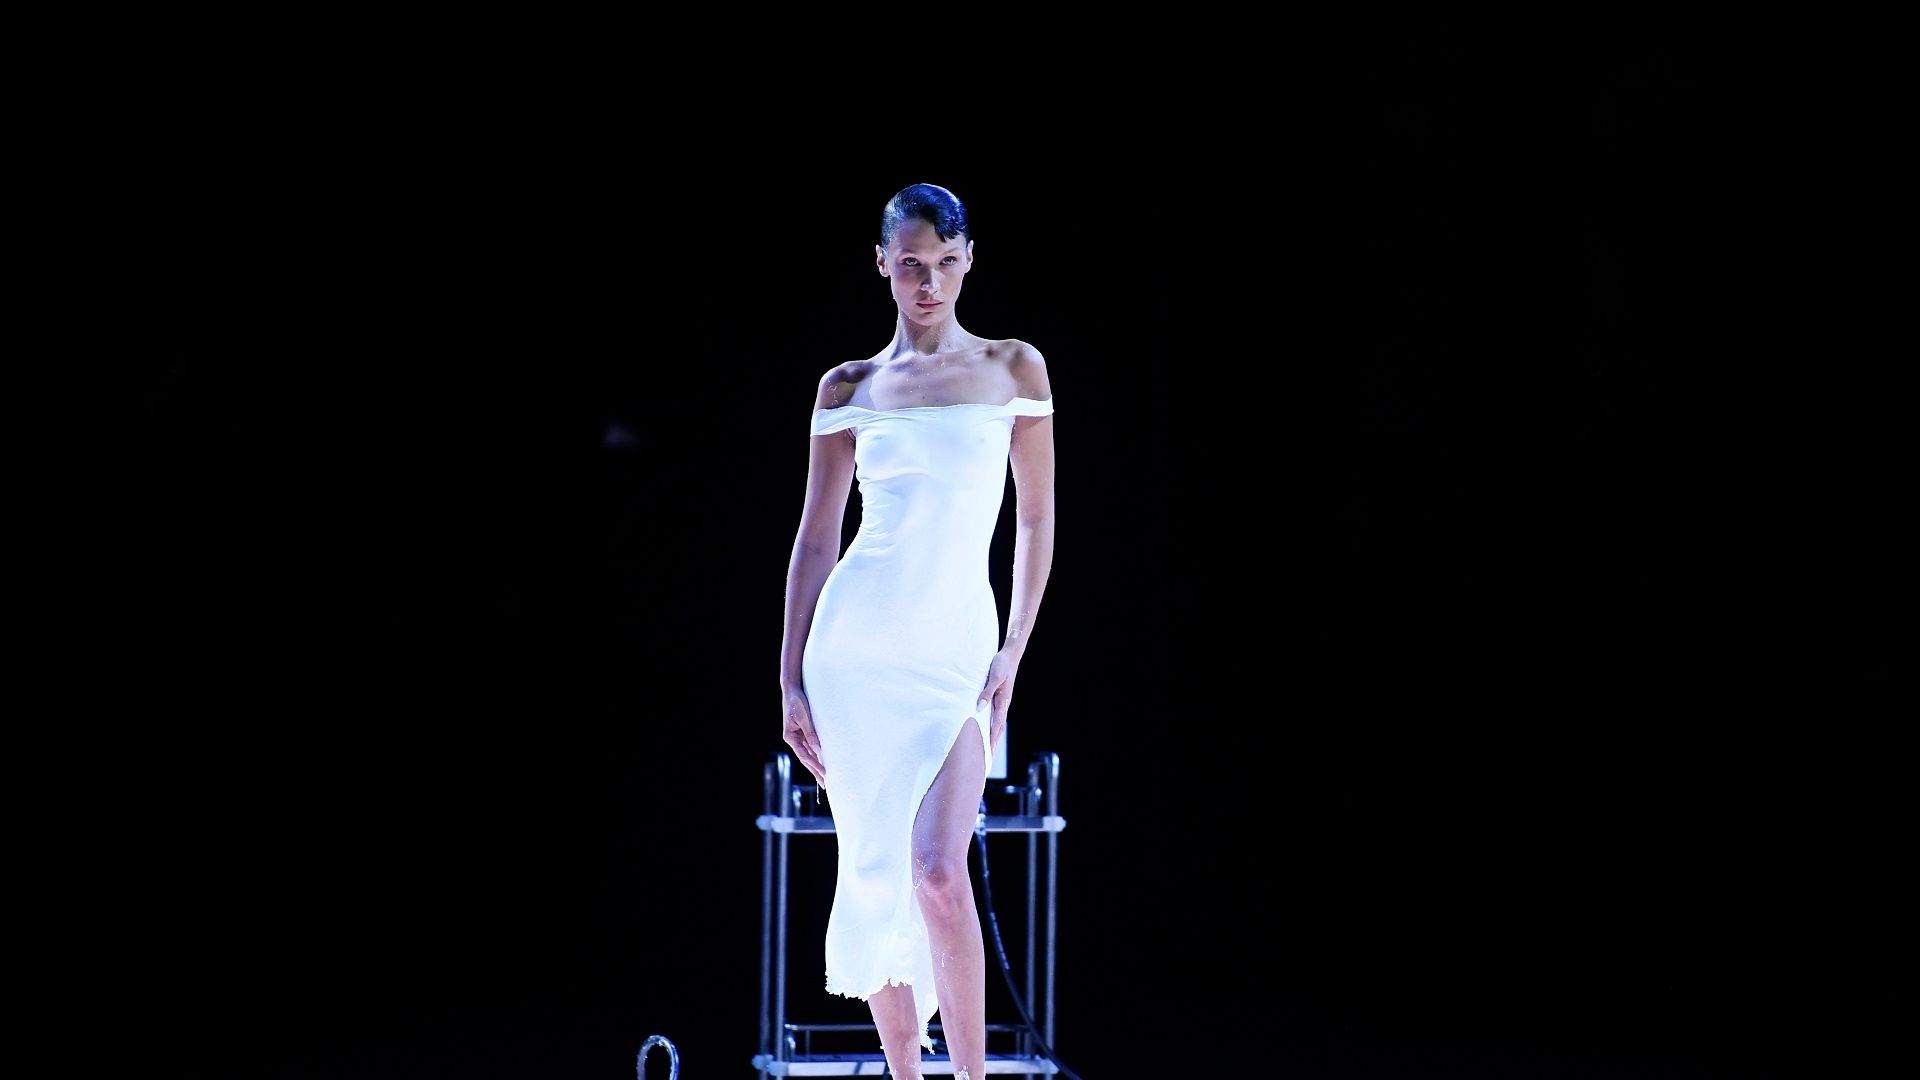 Bella Hadid Breaks the Internet at Coperni + More Paris Fashion Week -  FASHION Magazine